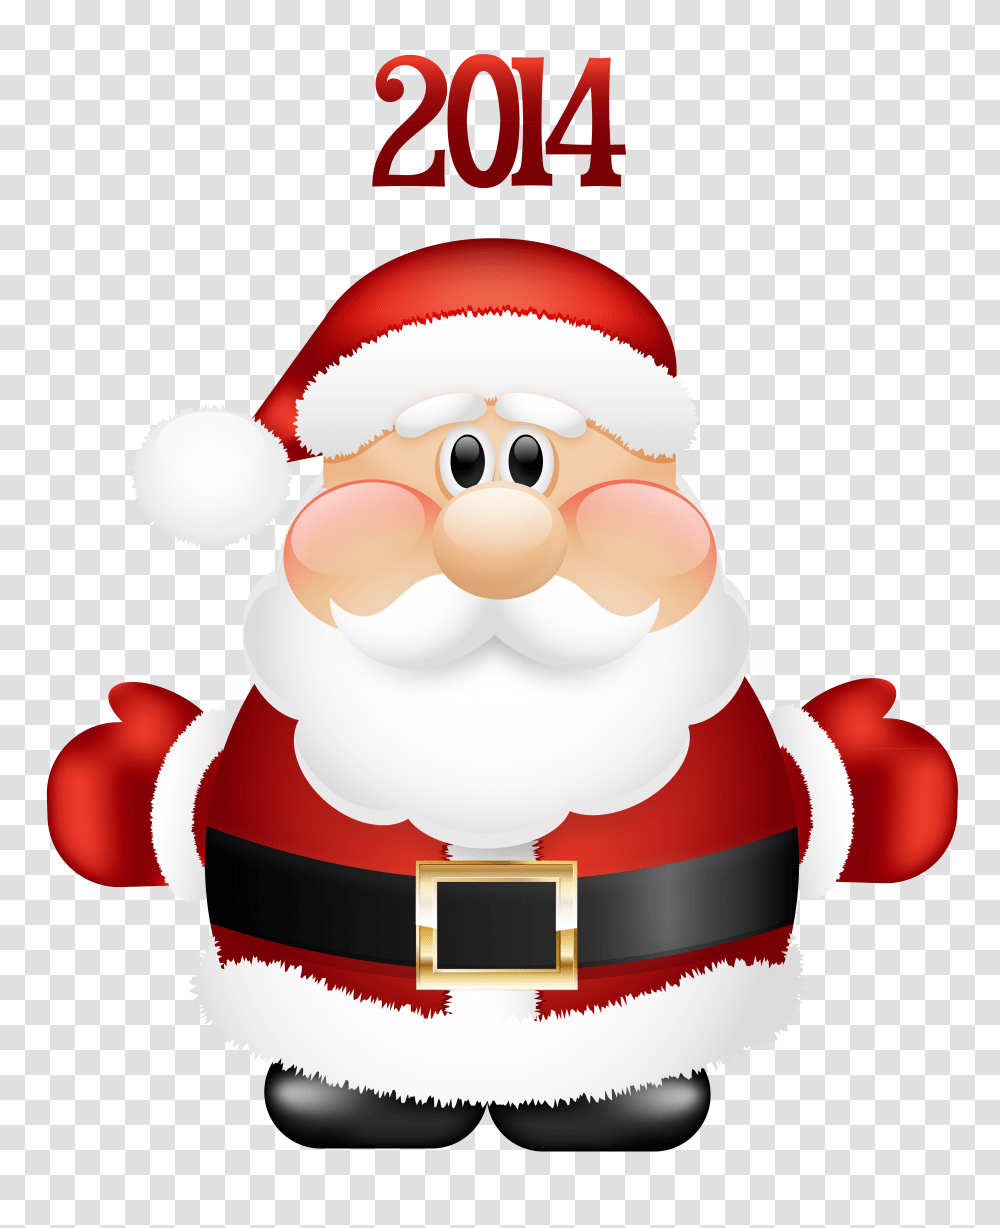 Christmas Santa Claus Hd Images Christmas Printable Cute Santa Claus, Snowman, Winter, Nature, Birthday Cake Transparent Png